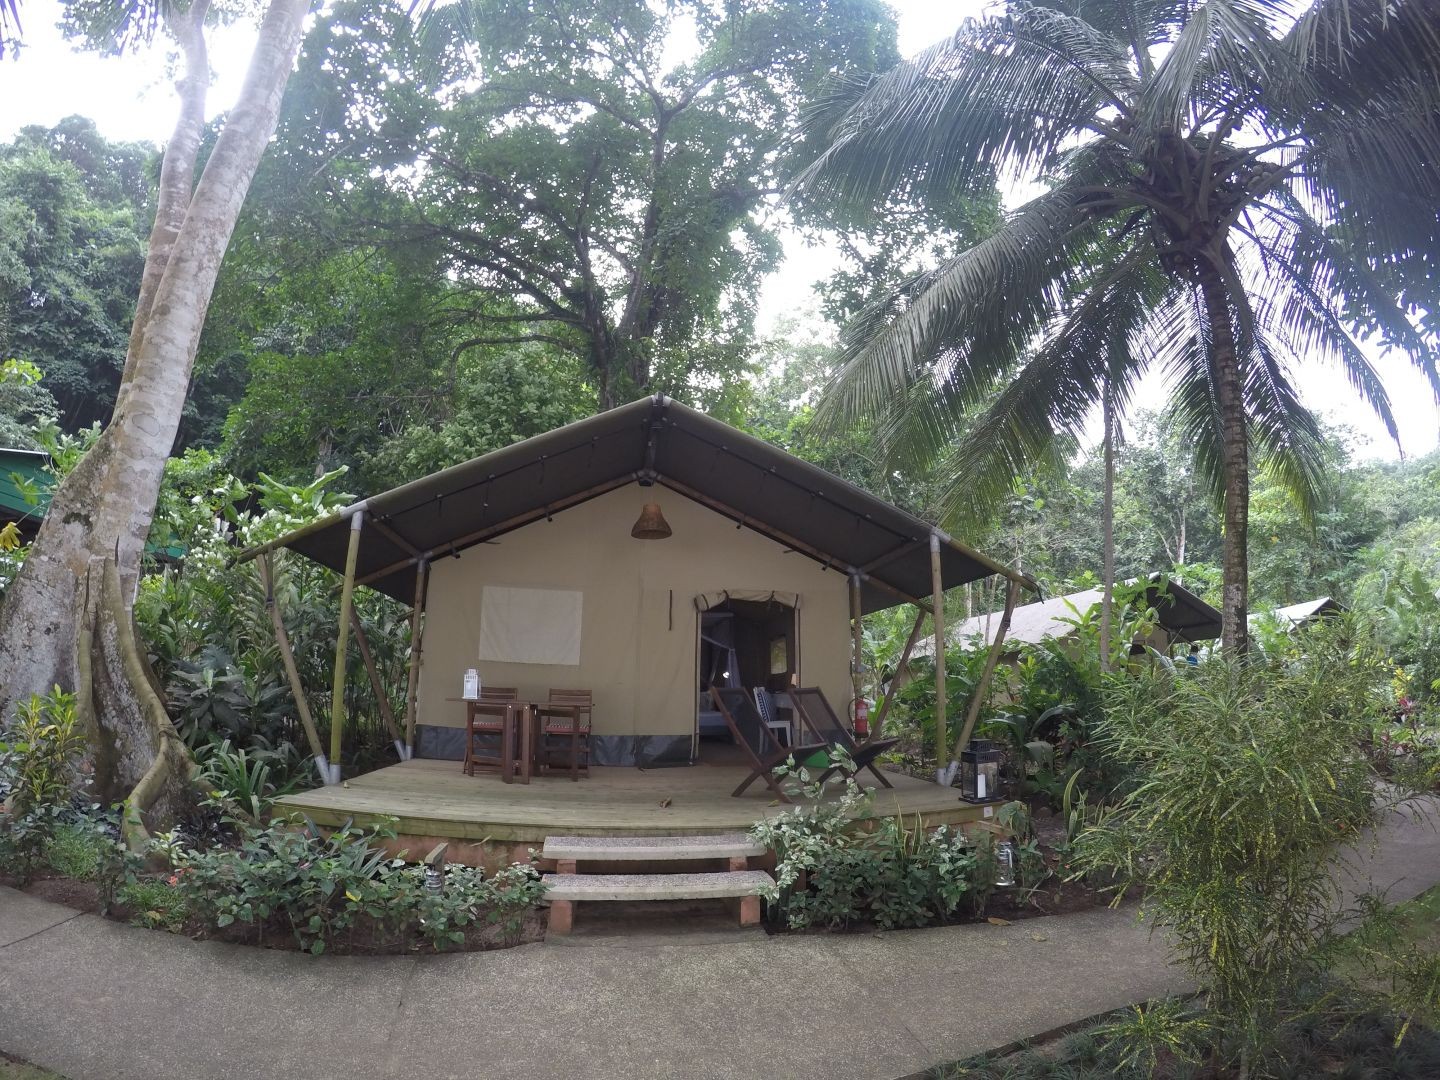 Makaira Lodge